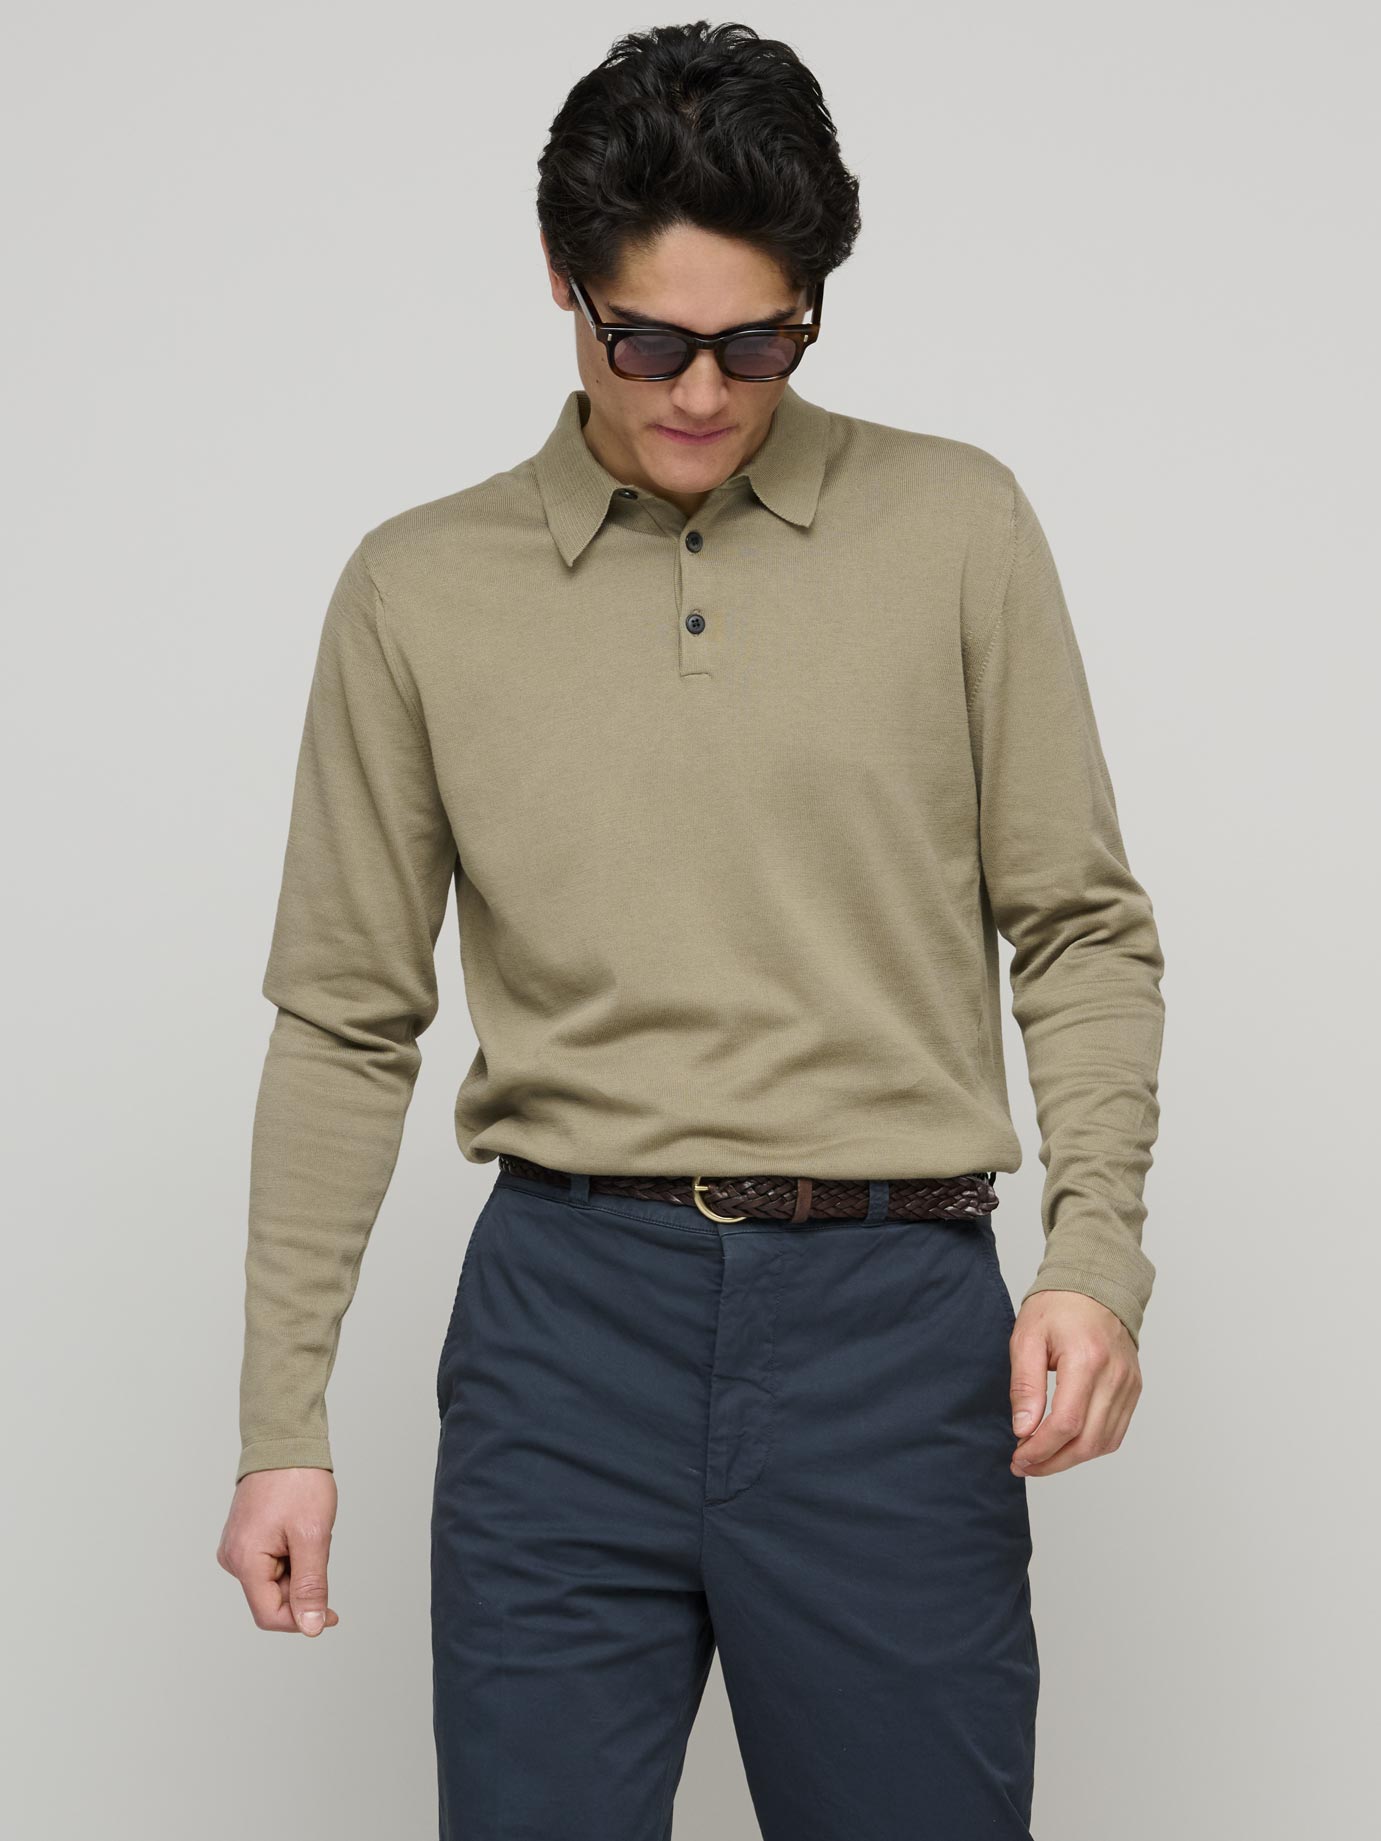 Sea Island Cotton Long Sleeve Polo Shirt, Dark Stone